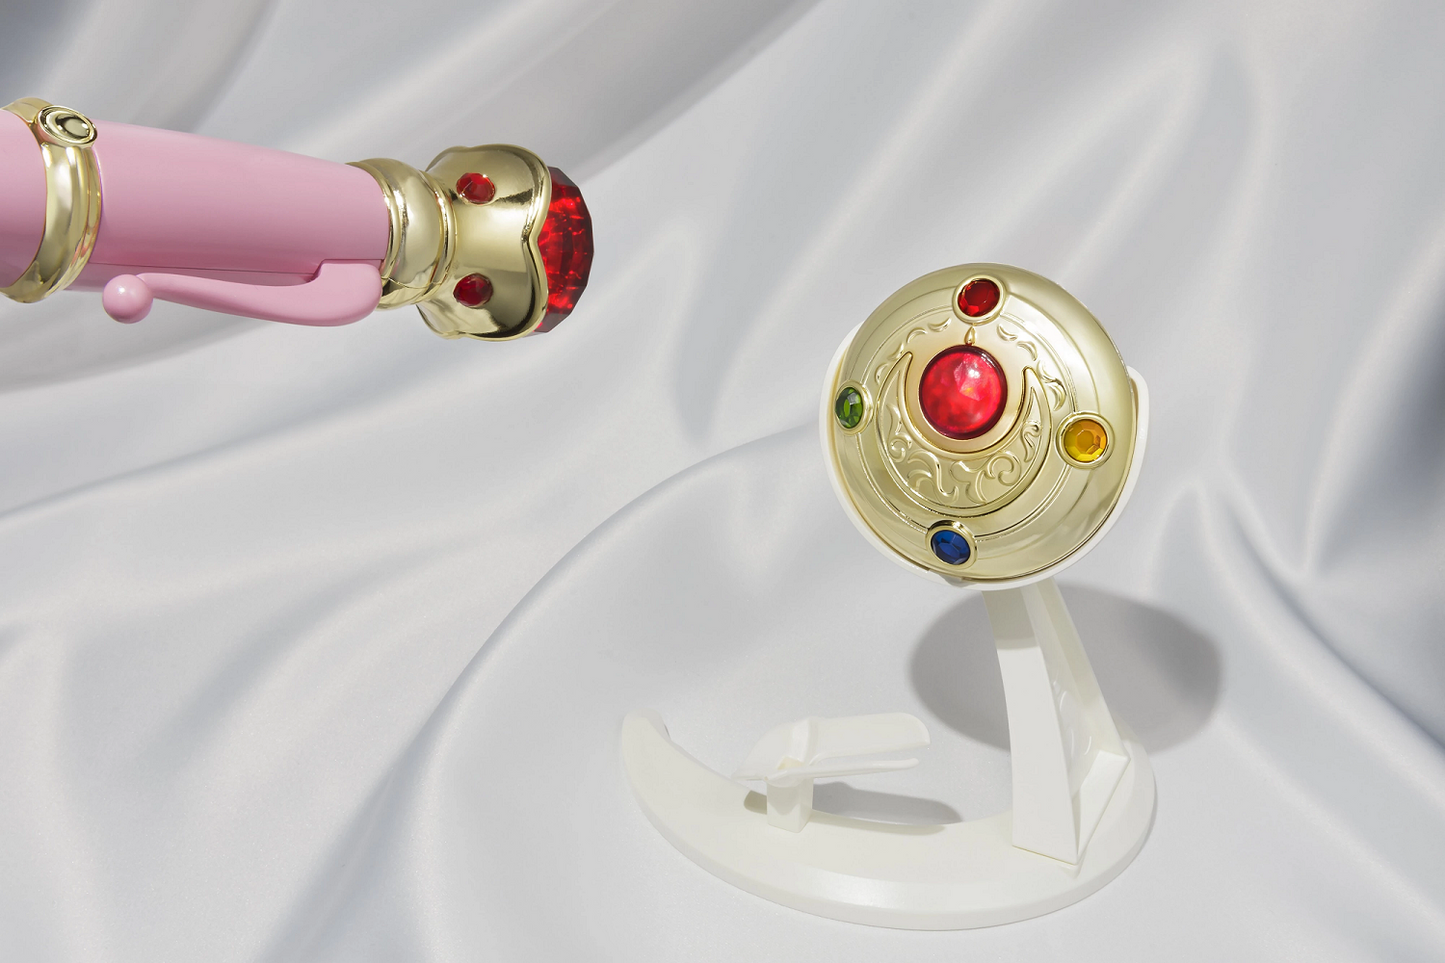 Sailor Moon: Sailor Moon Transformation Brooch & Disguise Pen Proplica Set